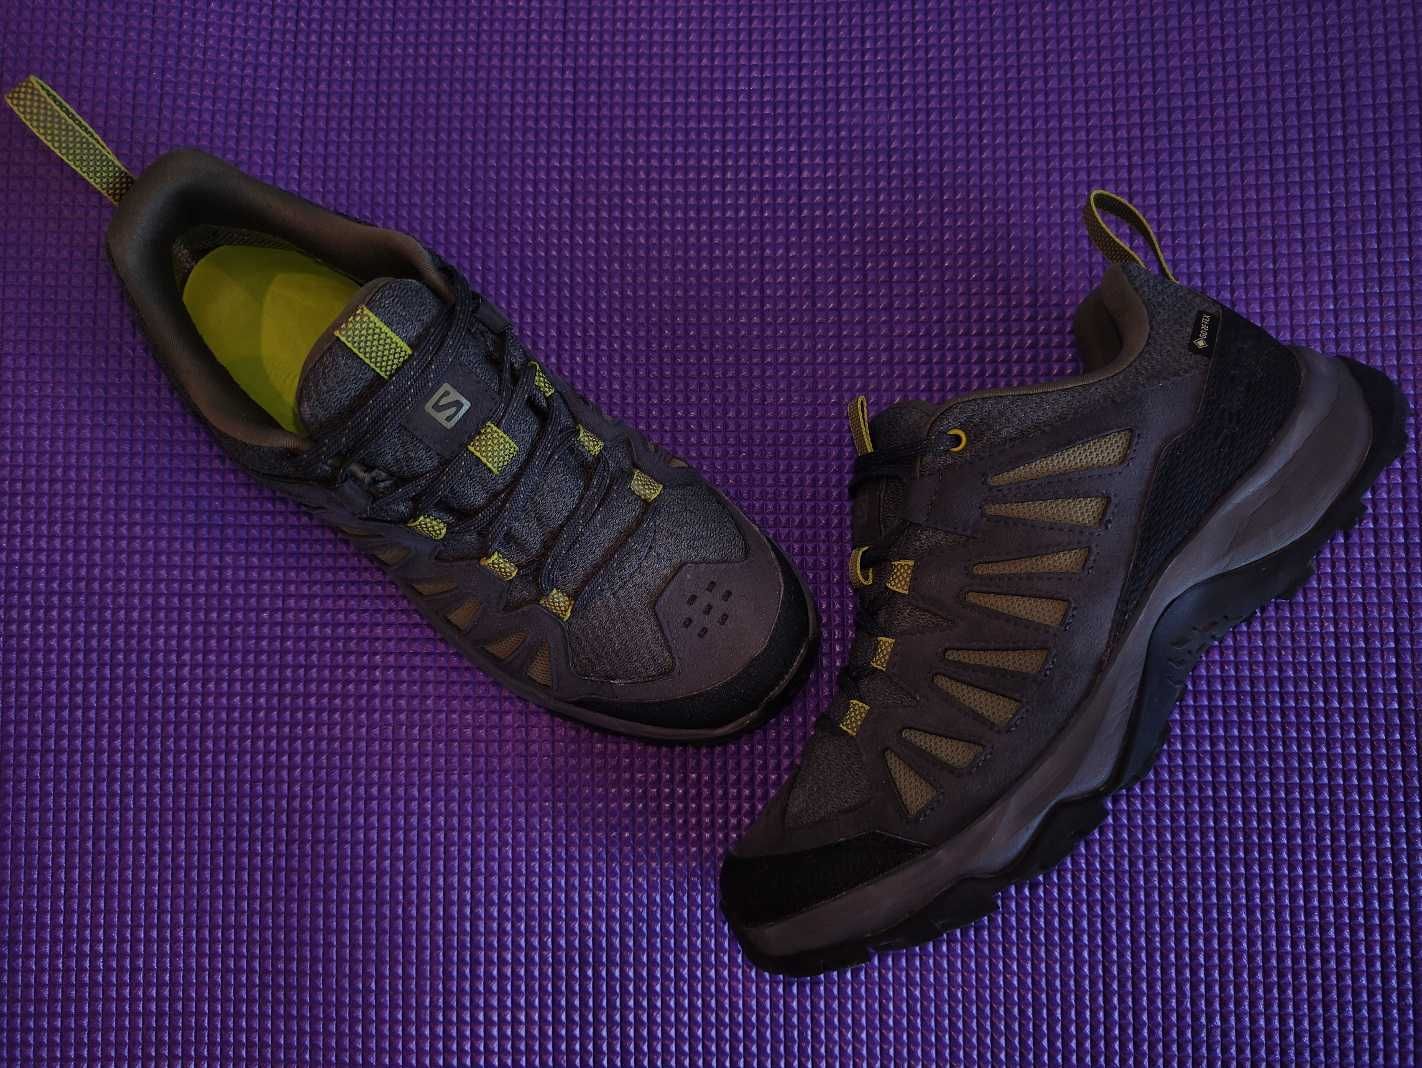 Salomon GTX Contagrip Hiking № 40 - оригинални обувки